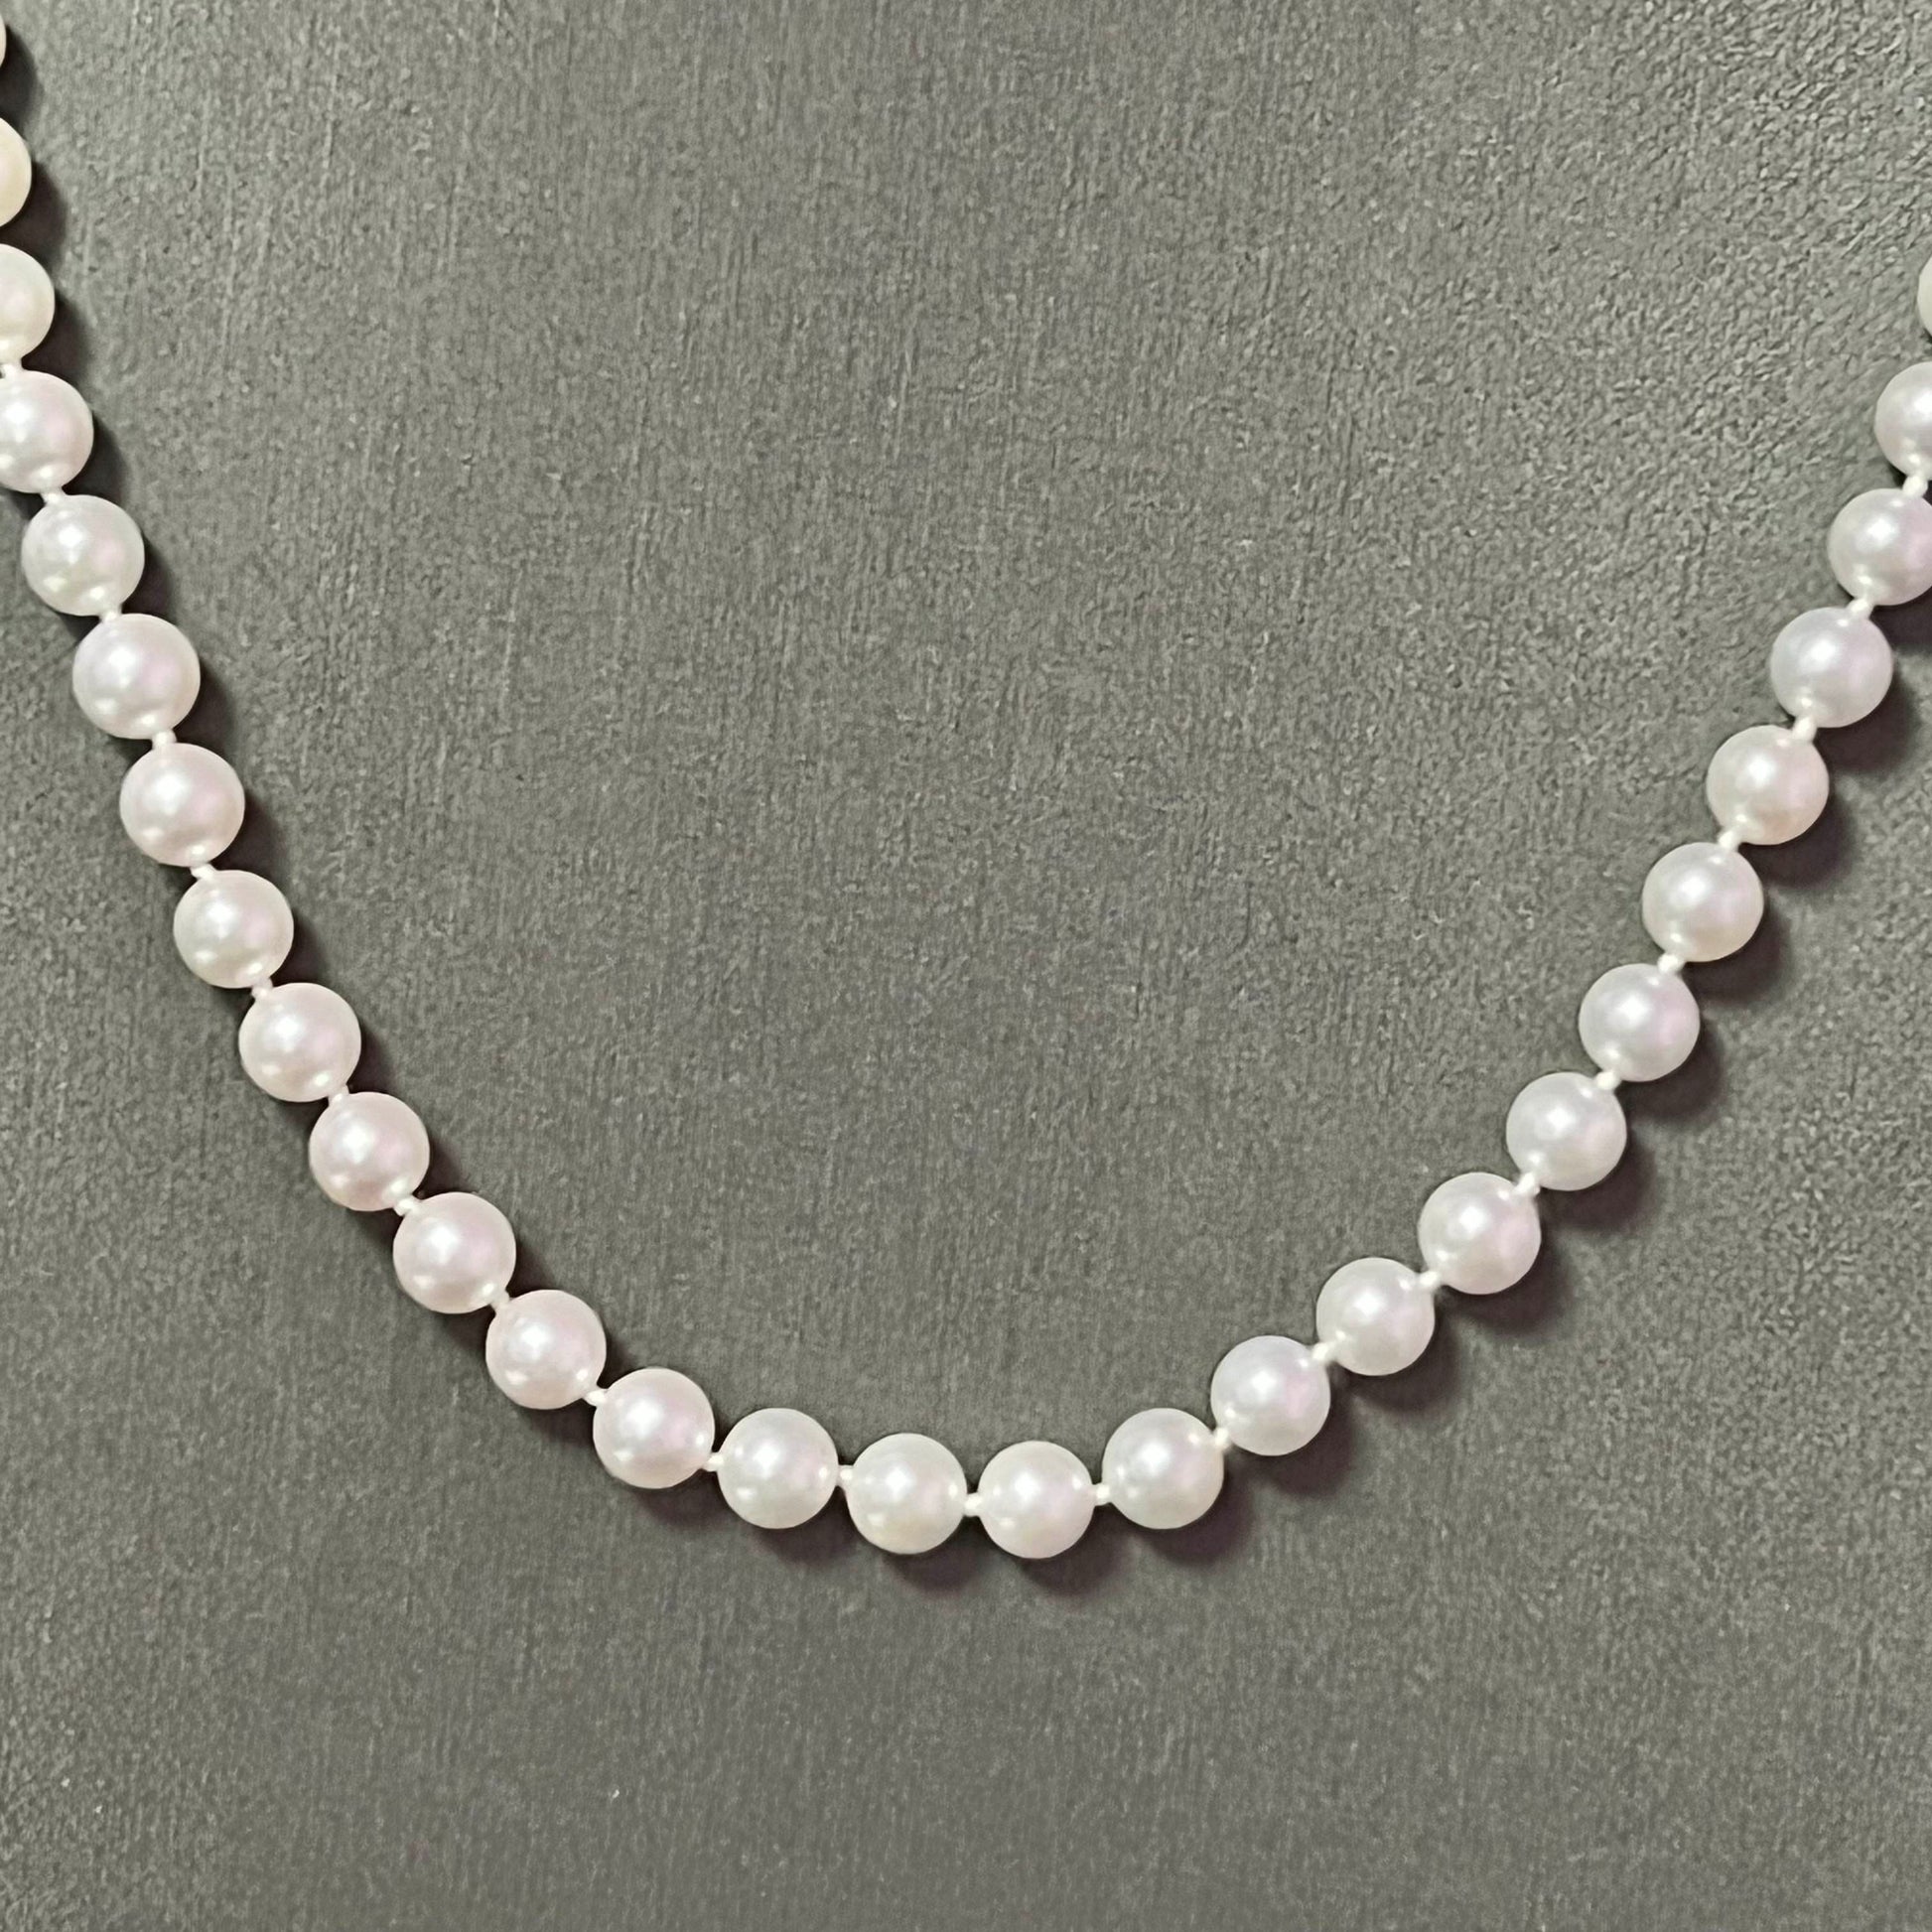 Mikimoto Estate Akoya Pearl Necklace Set 24" 18k W Gold 7 mm Certified $4,950 217056 - Certified Fine Jewelry